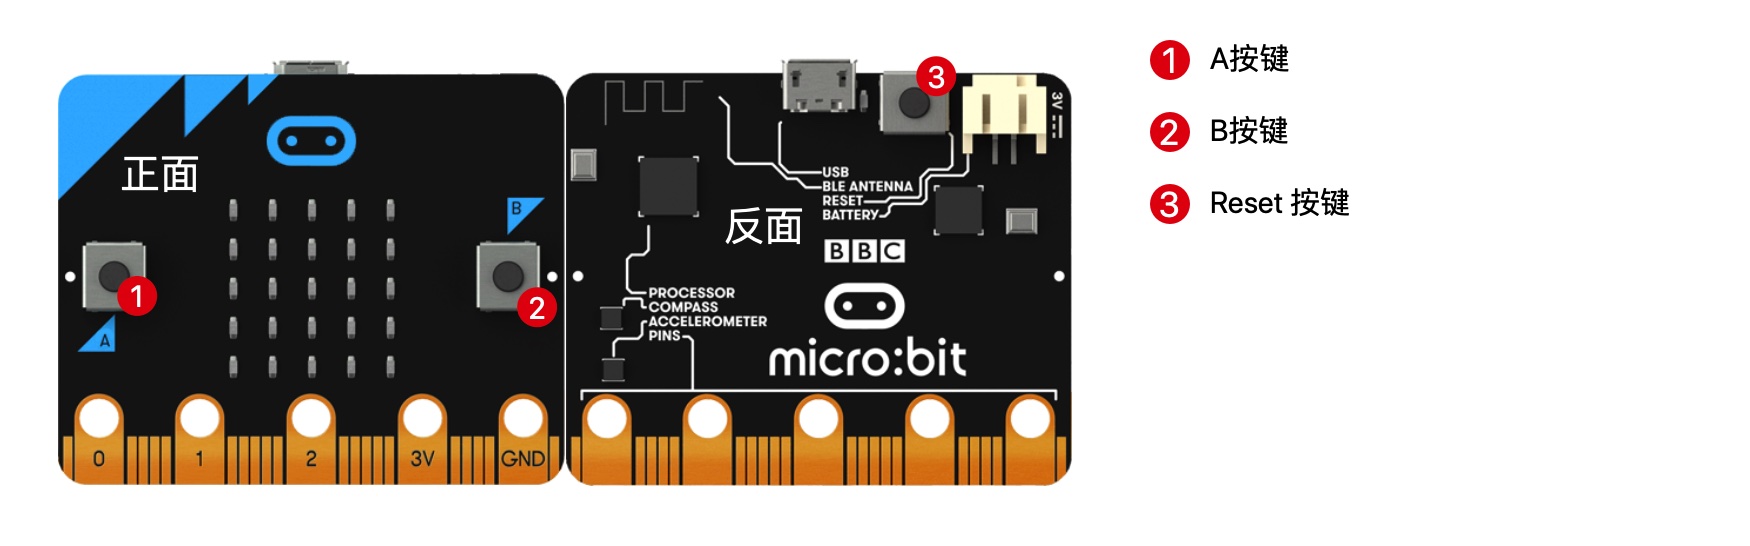 Micro:Bit 蓝牙如何在开机状态进行连接？的配图